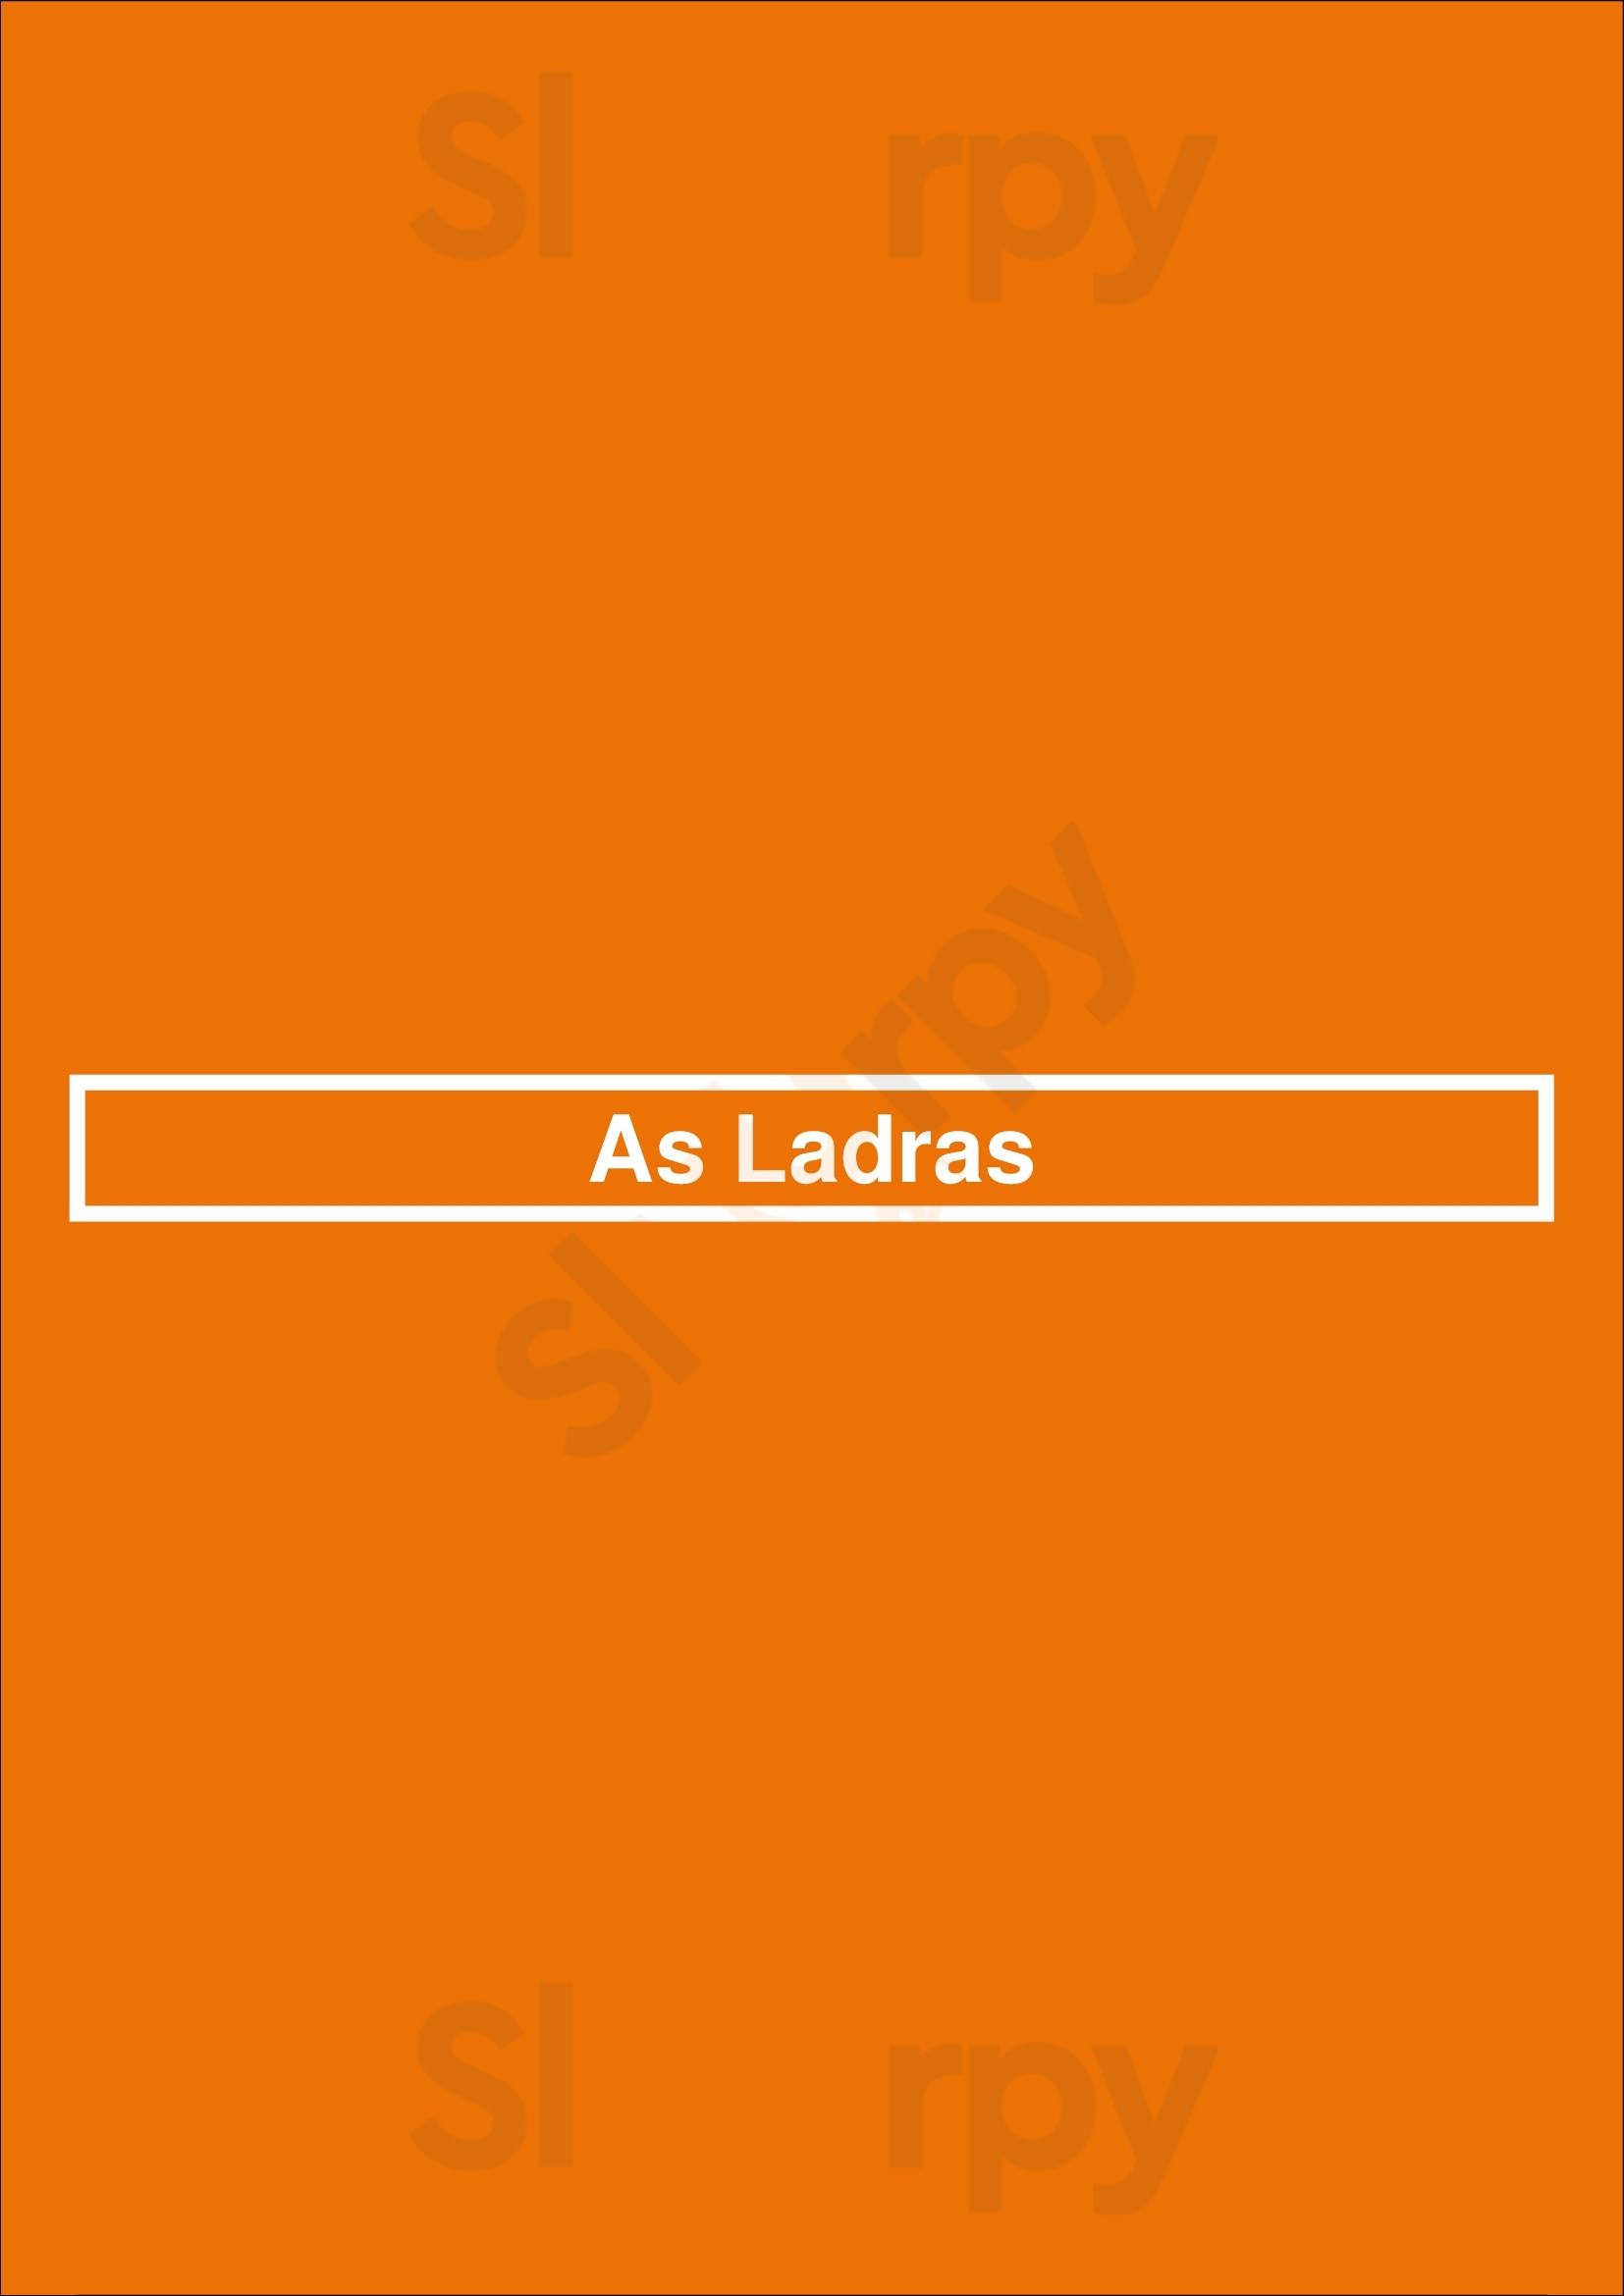 As Ladras Lisboa Menu - 1